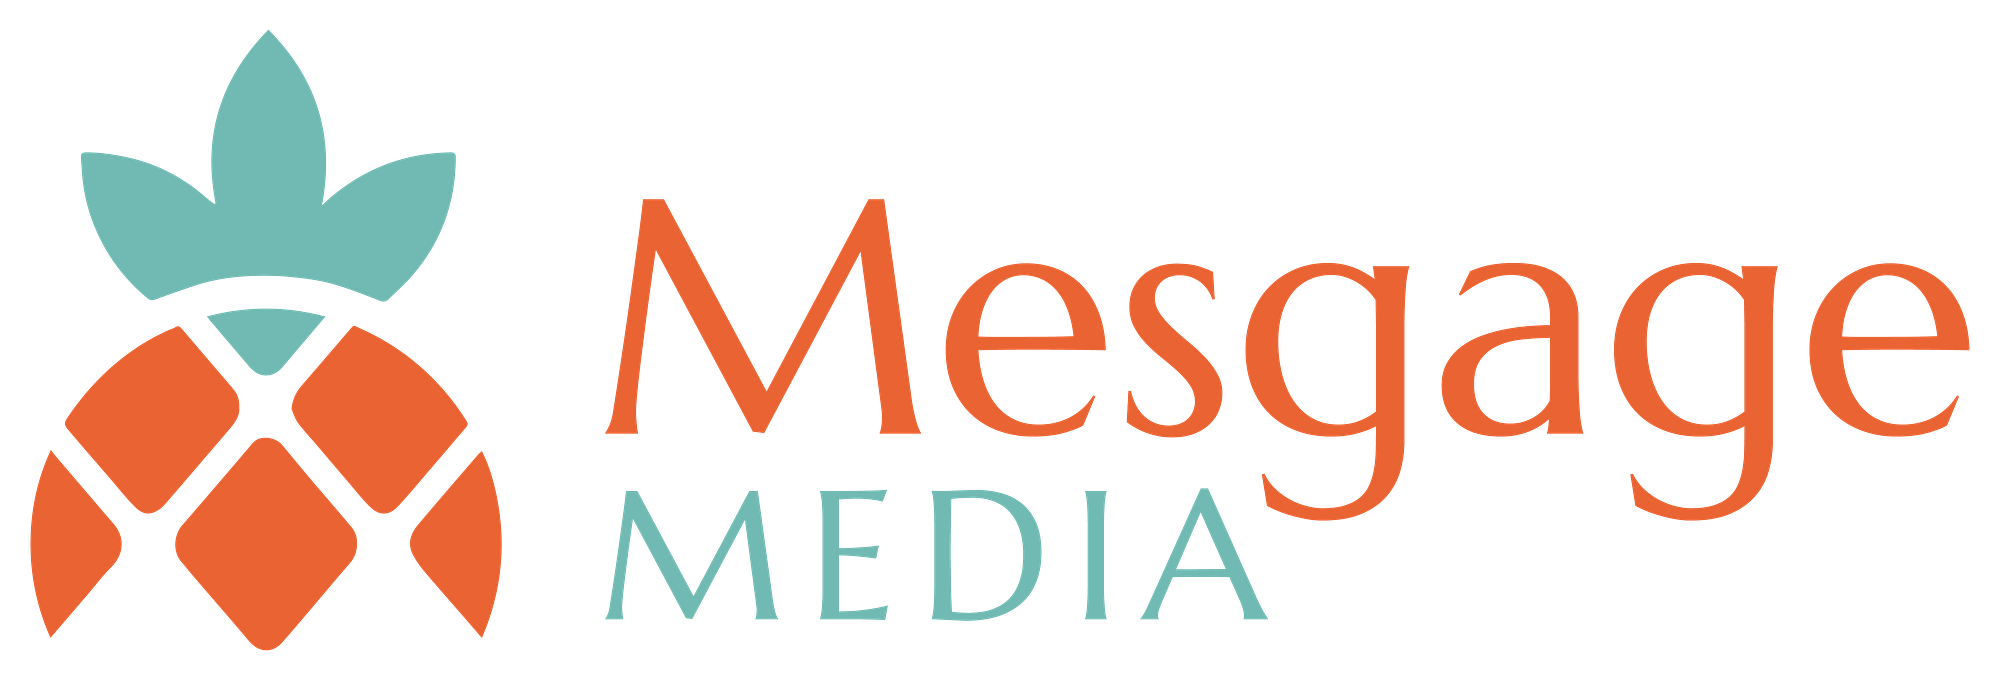 Mesgage Media